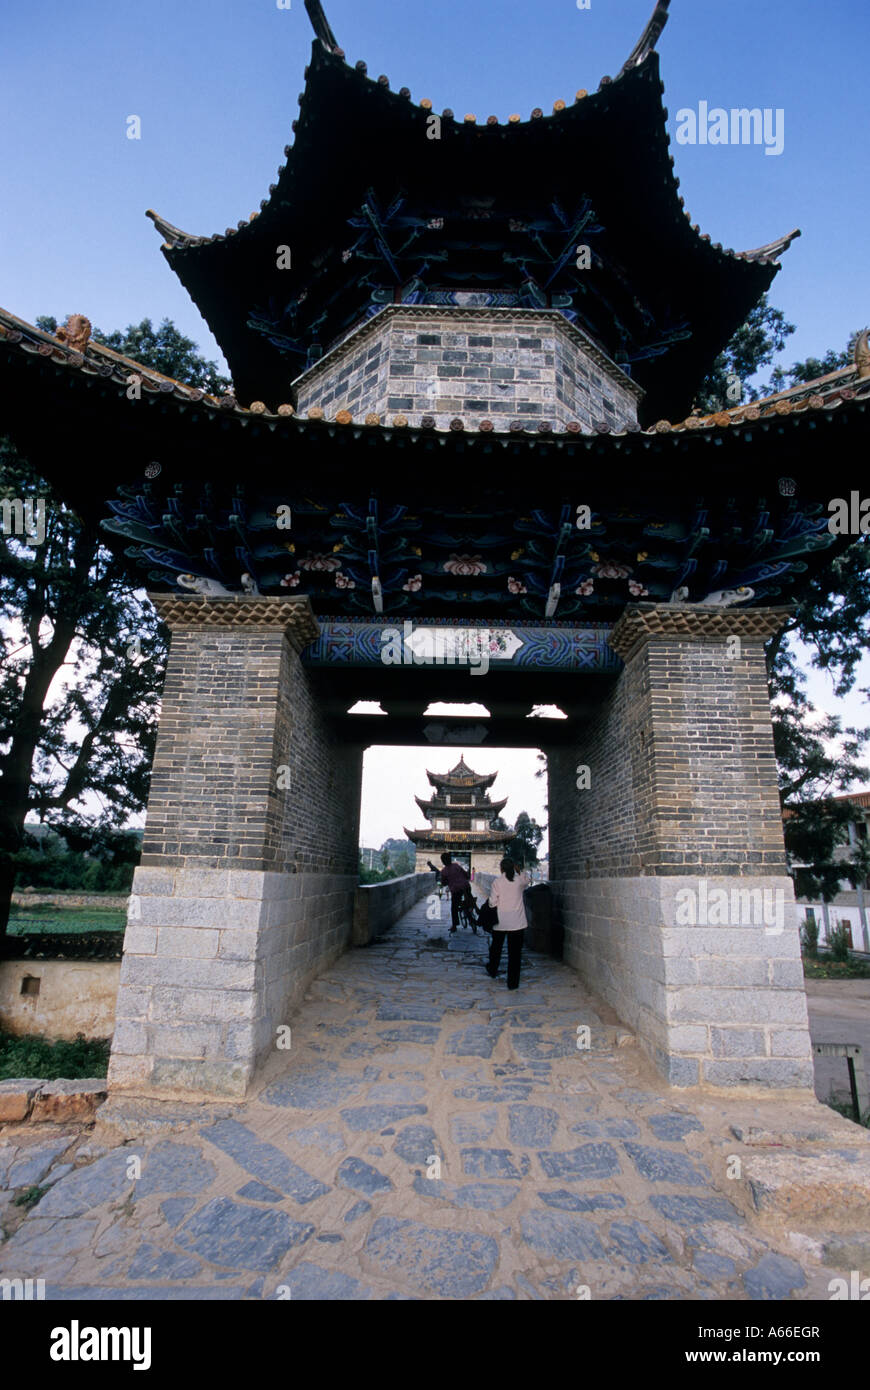 One of the small pavilions at the end of the Twin Dragon Bridge (Shuanglong Qiao) in Jianshui. Yunnan, China Stock Photo